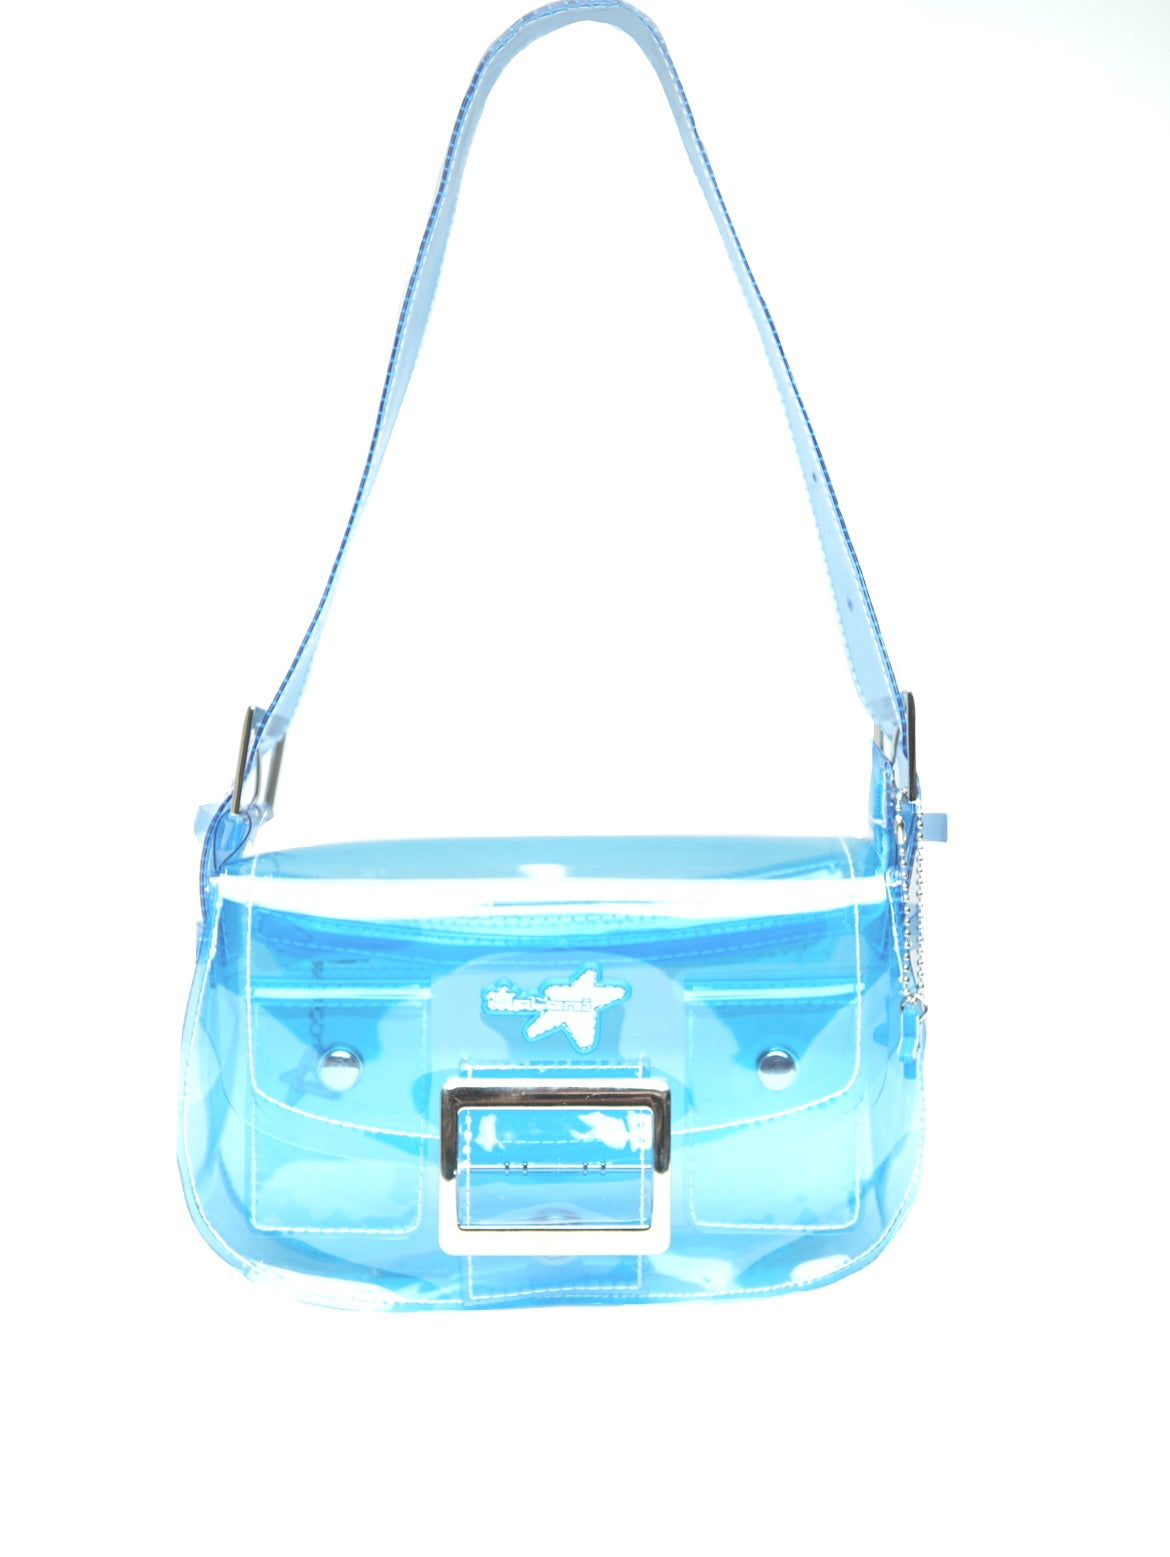 Solani Blue Jelly Bag